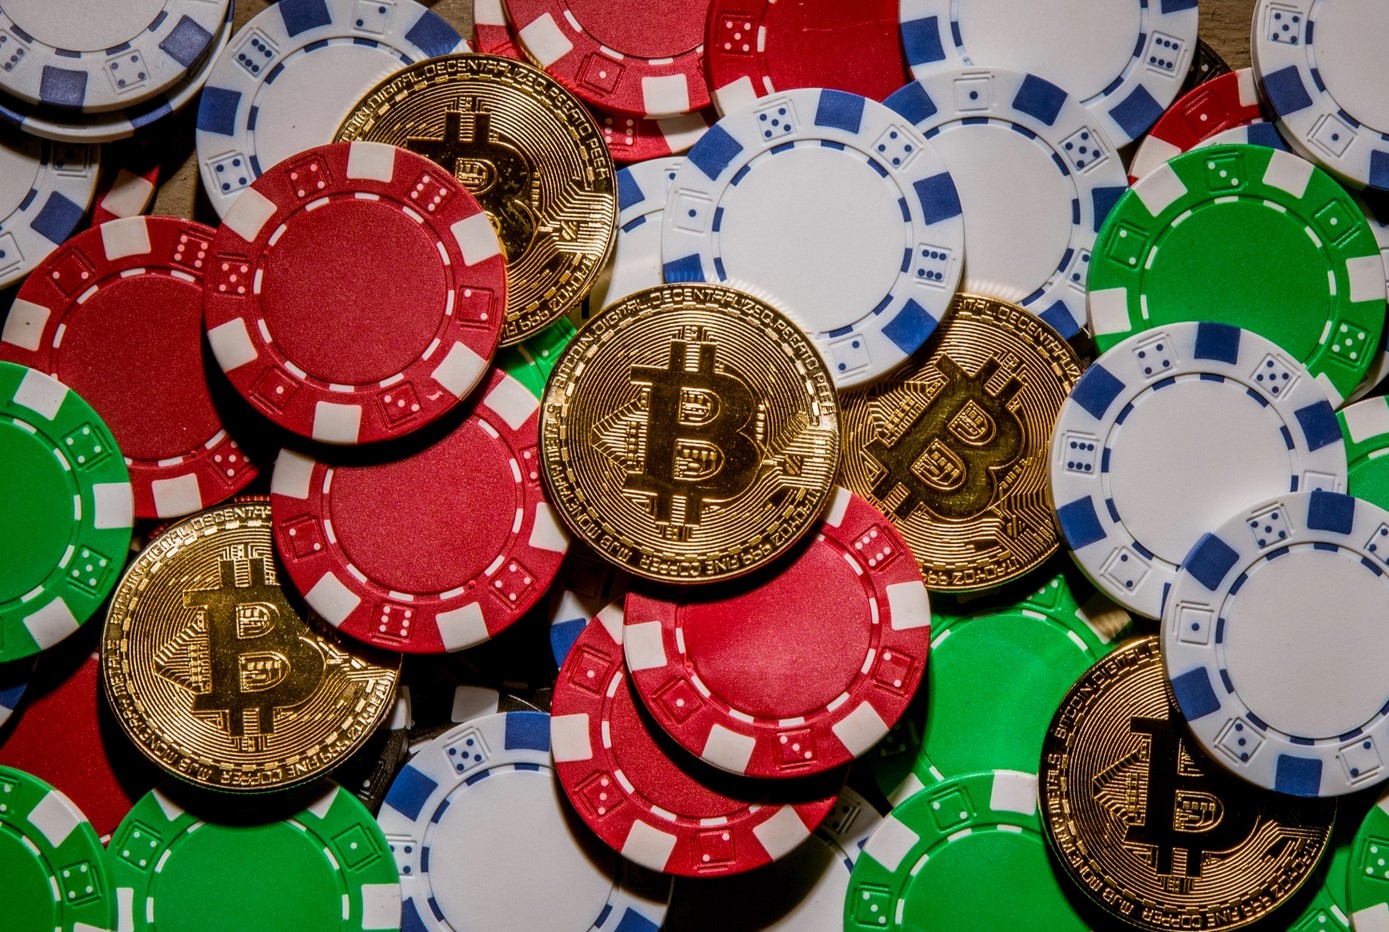 bitcoin casino no deposit bonus? It's Easy If You Do It Smart